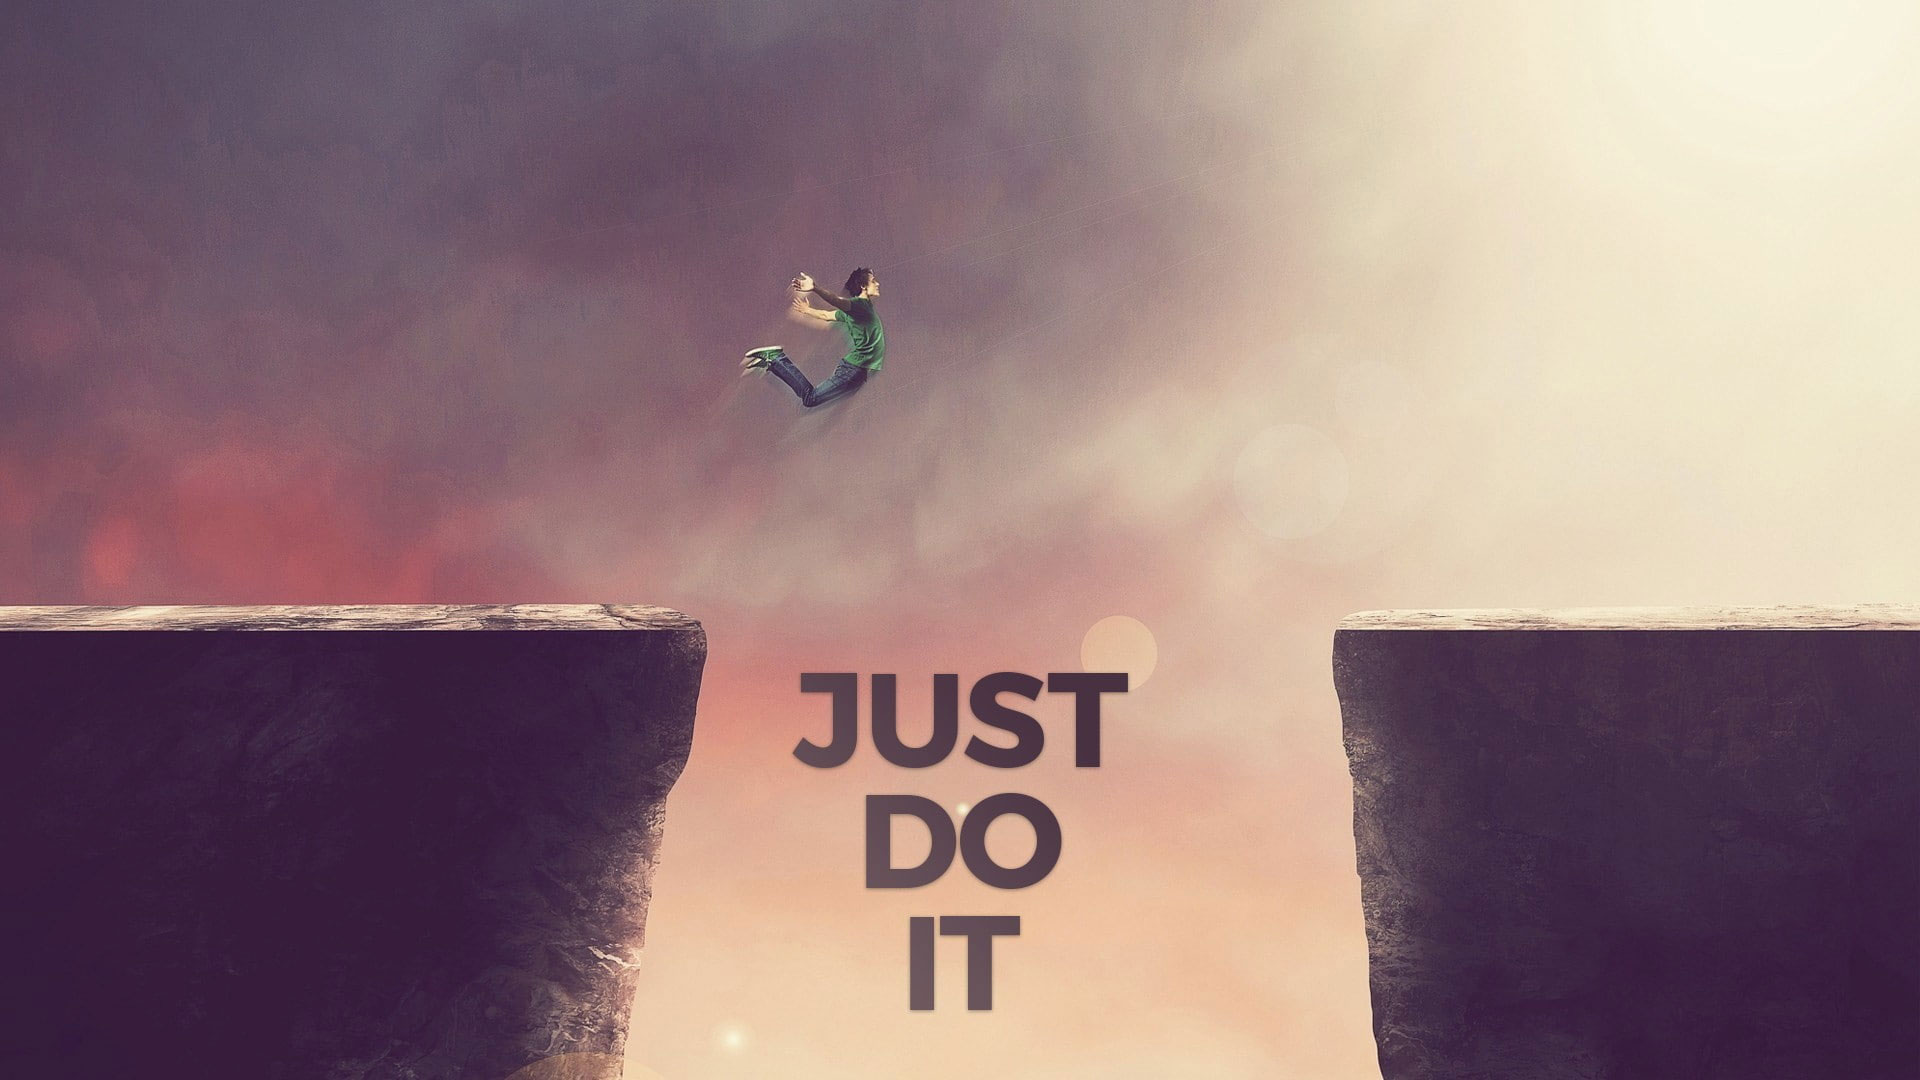 Wallpaper Just Do It, Motivational, Nike, Jumping